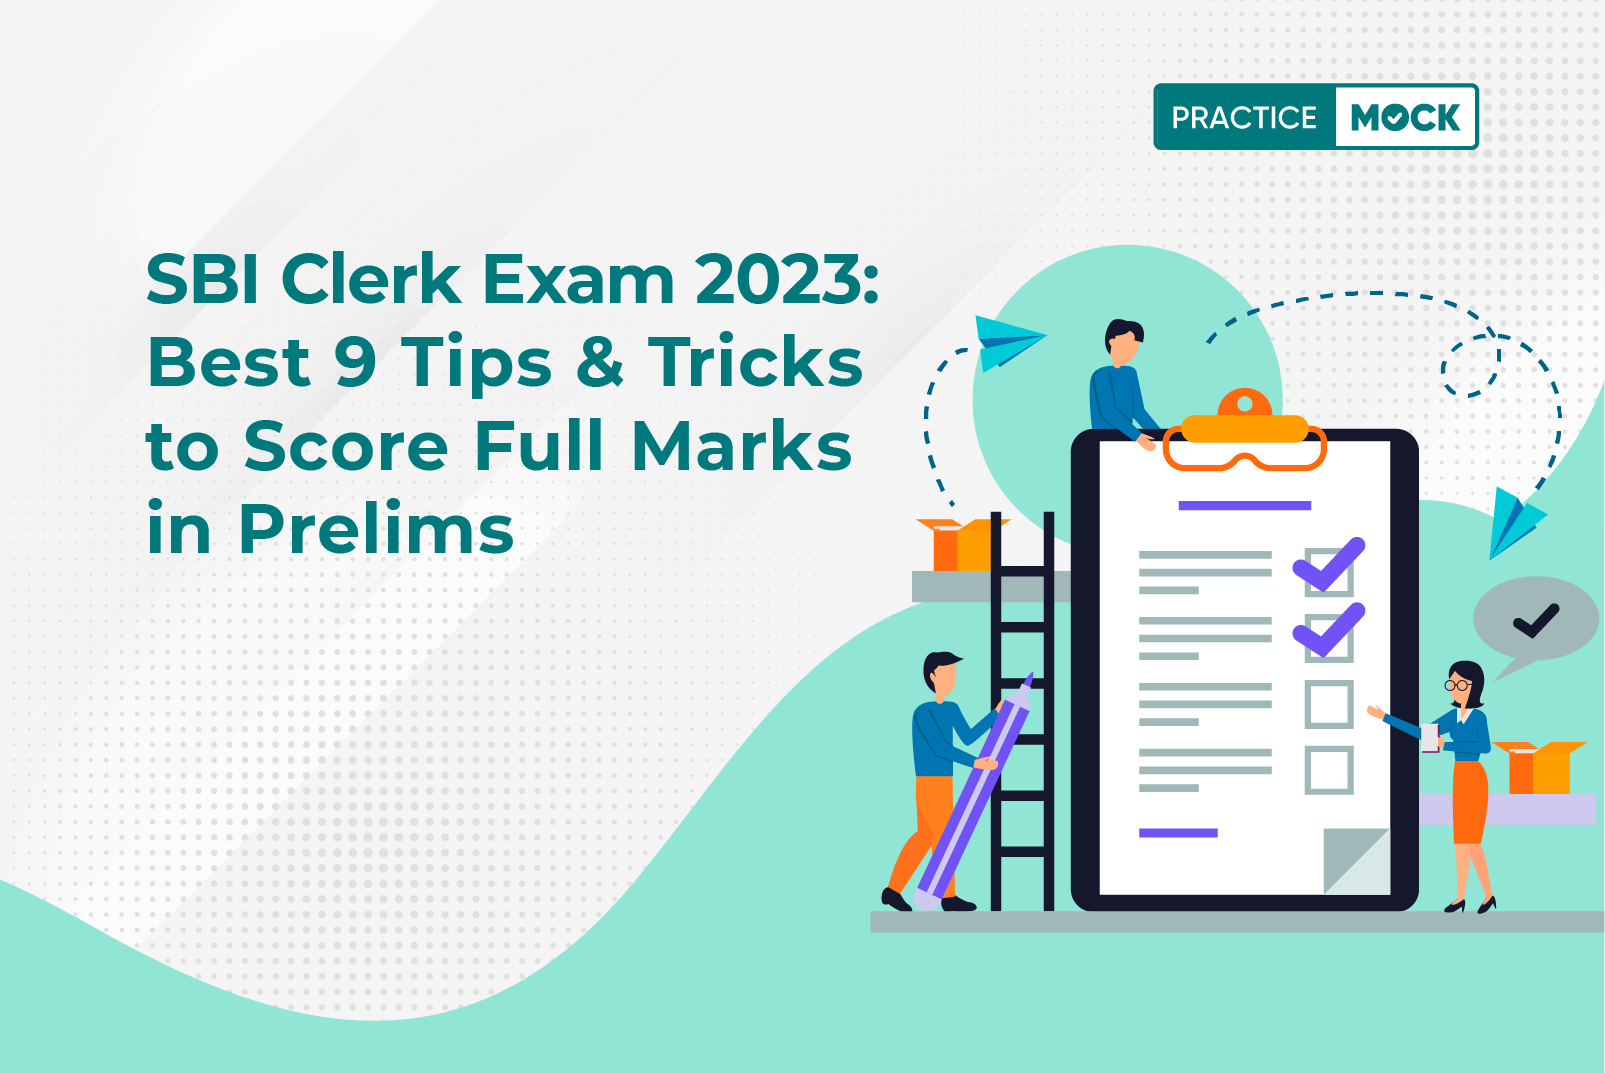 SBI Clerk Exam 2023: Best 9 Tips and Tricks to Score Full Marks in Prelims